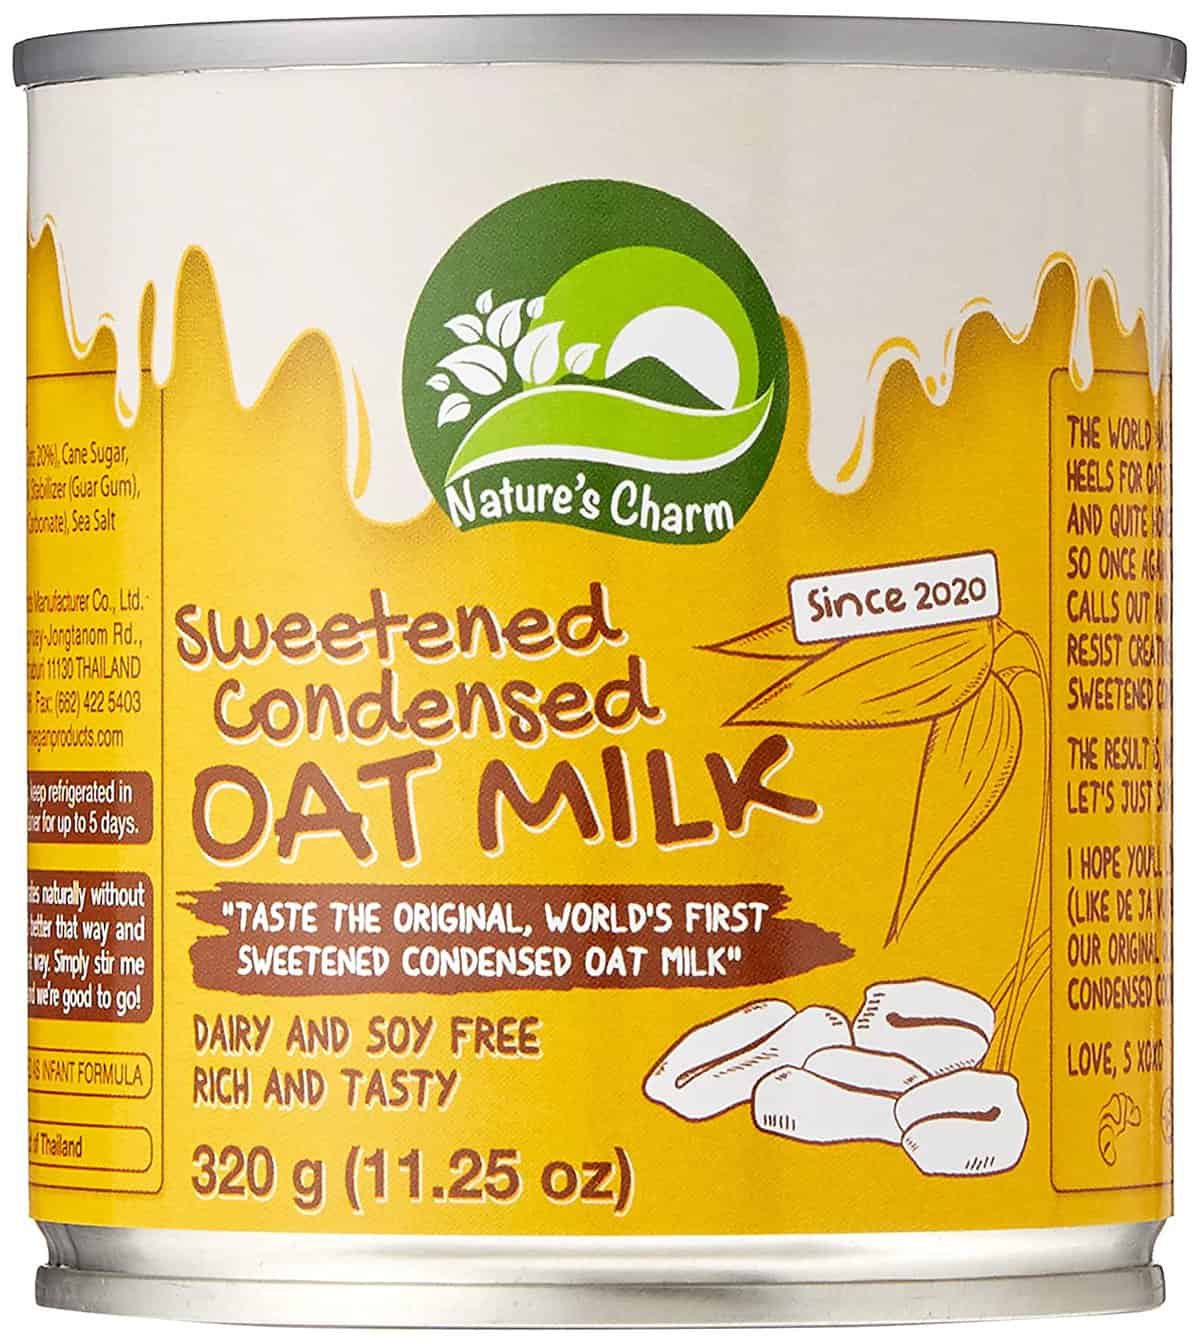 Sweetened condensed oat milk